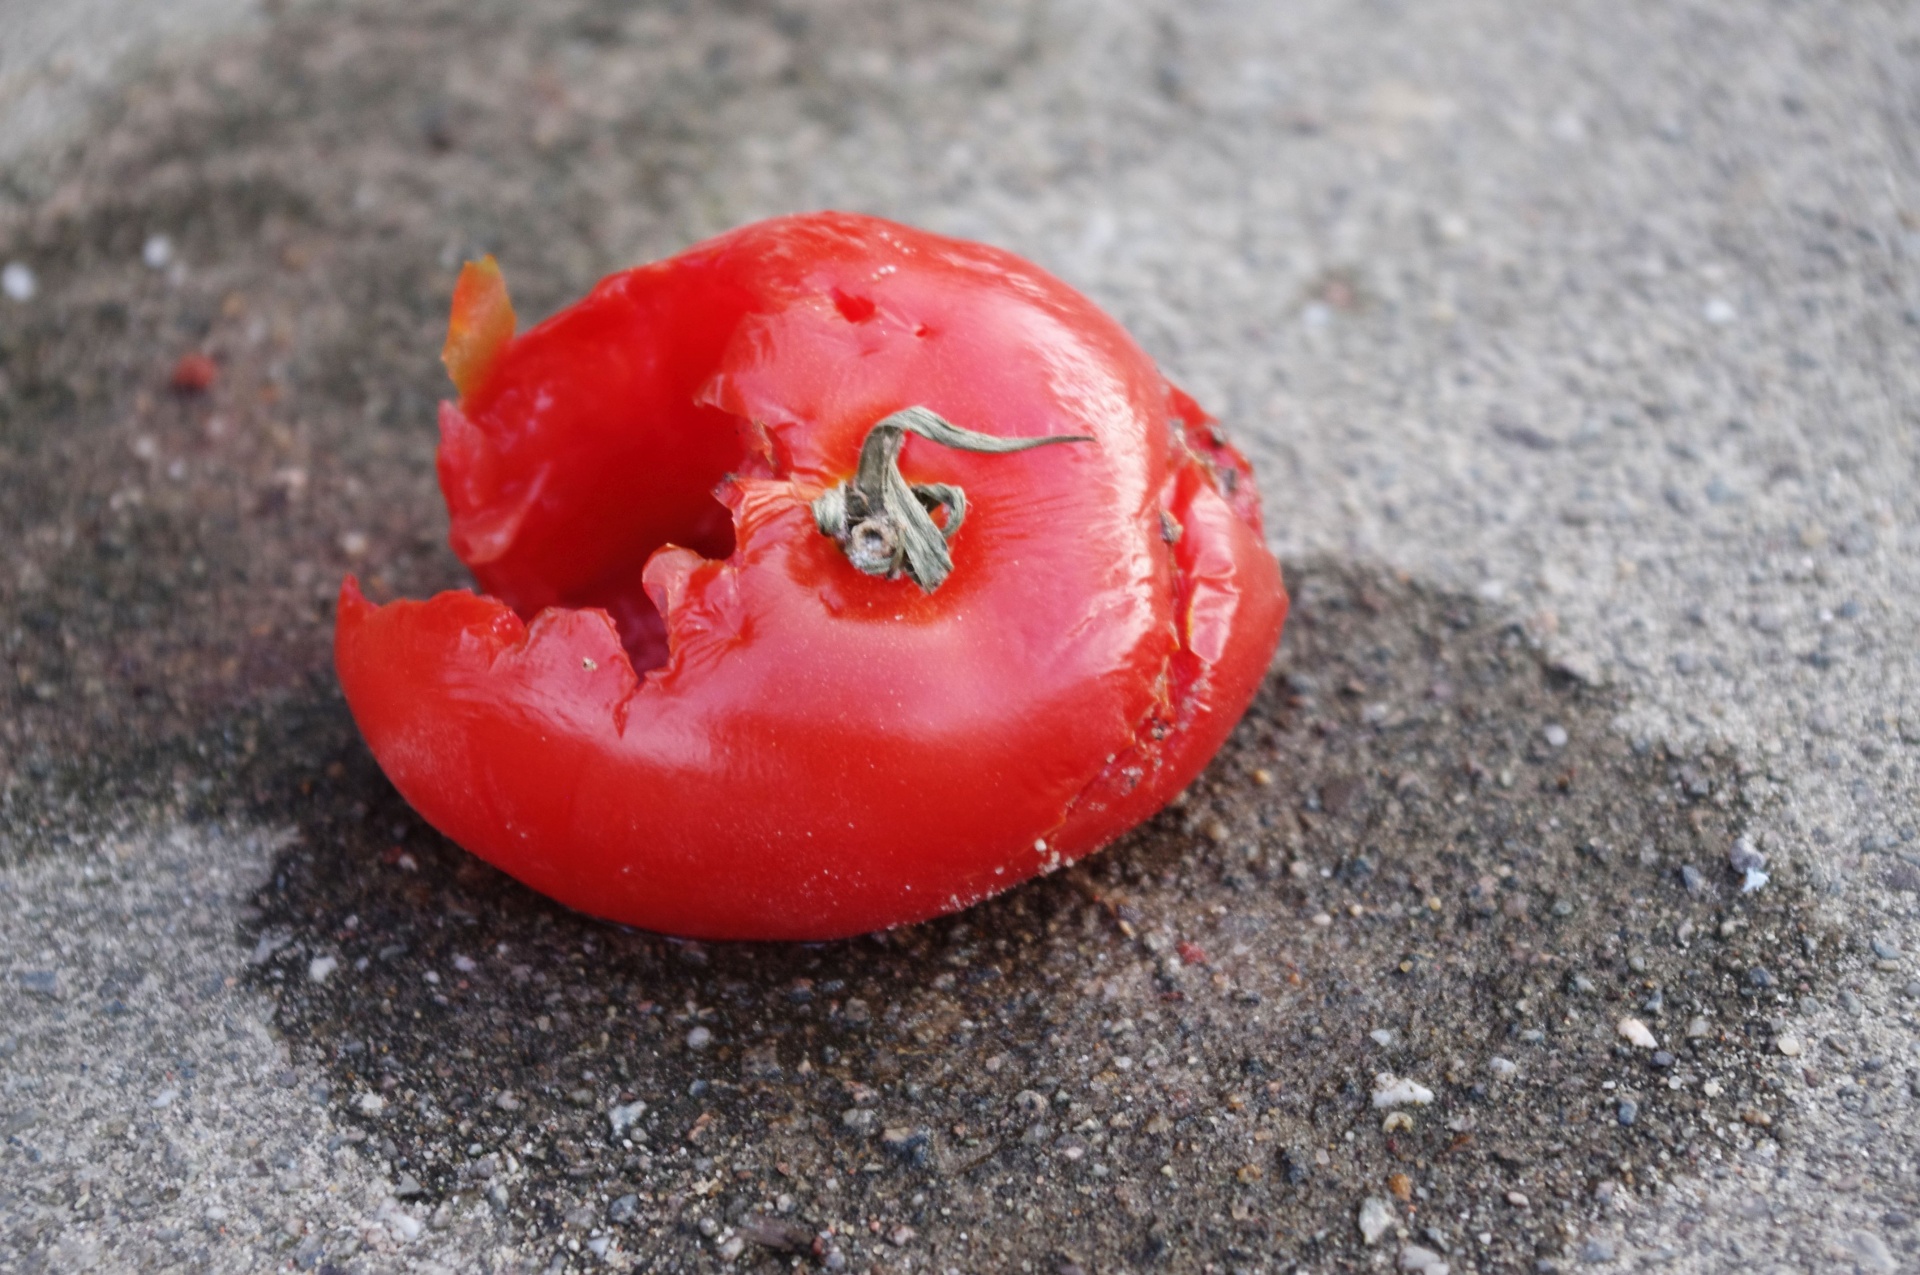 Download Tomato Food Waste Free Photo.